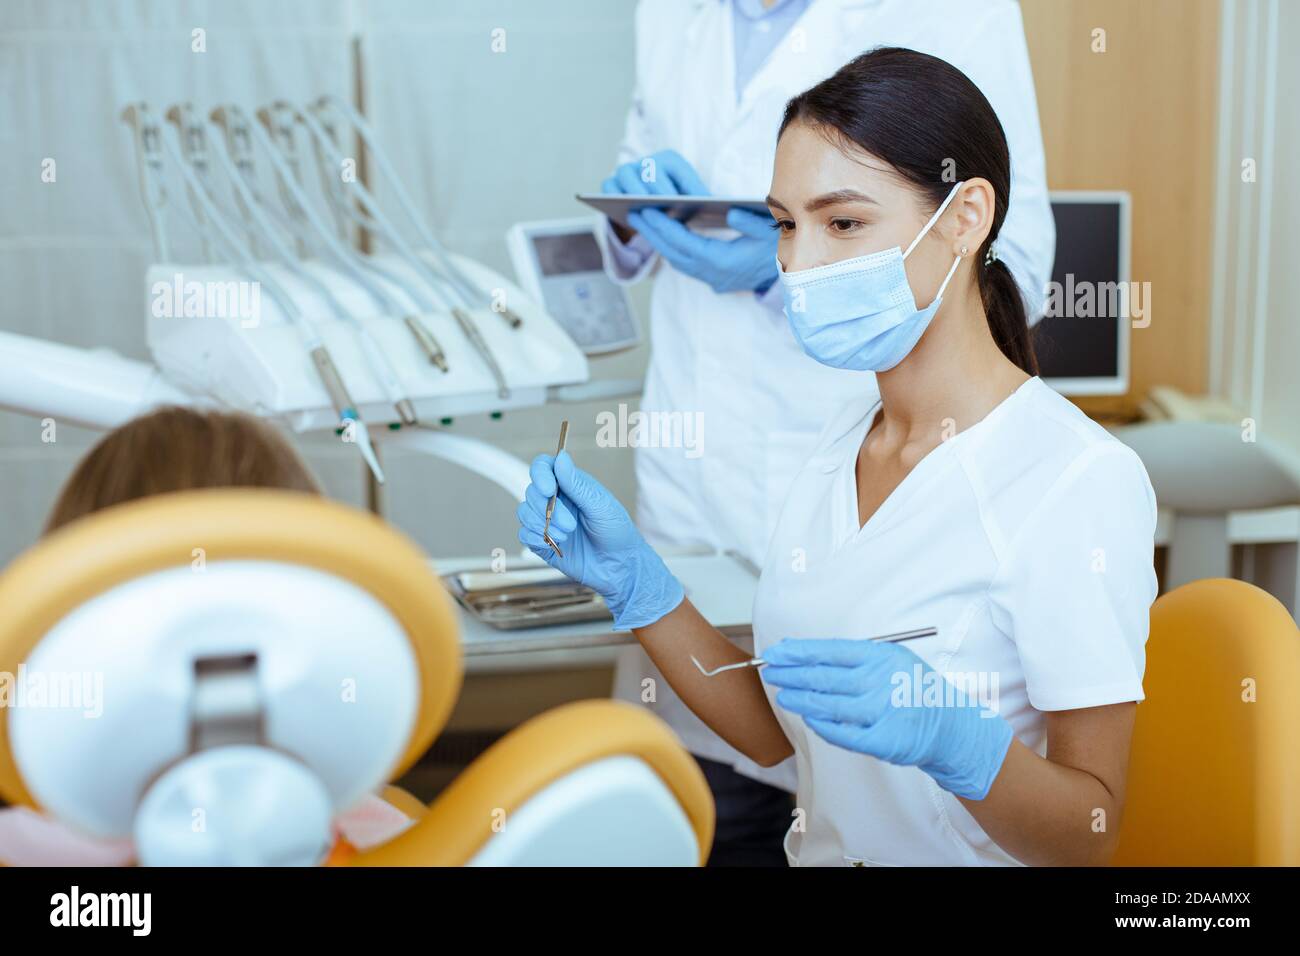 Painless dental treatment